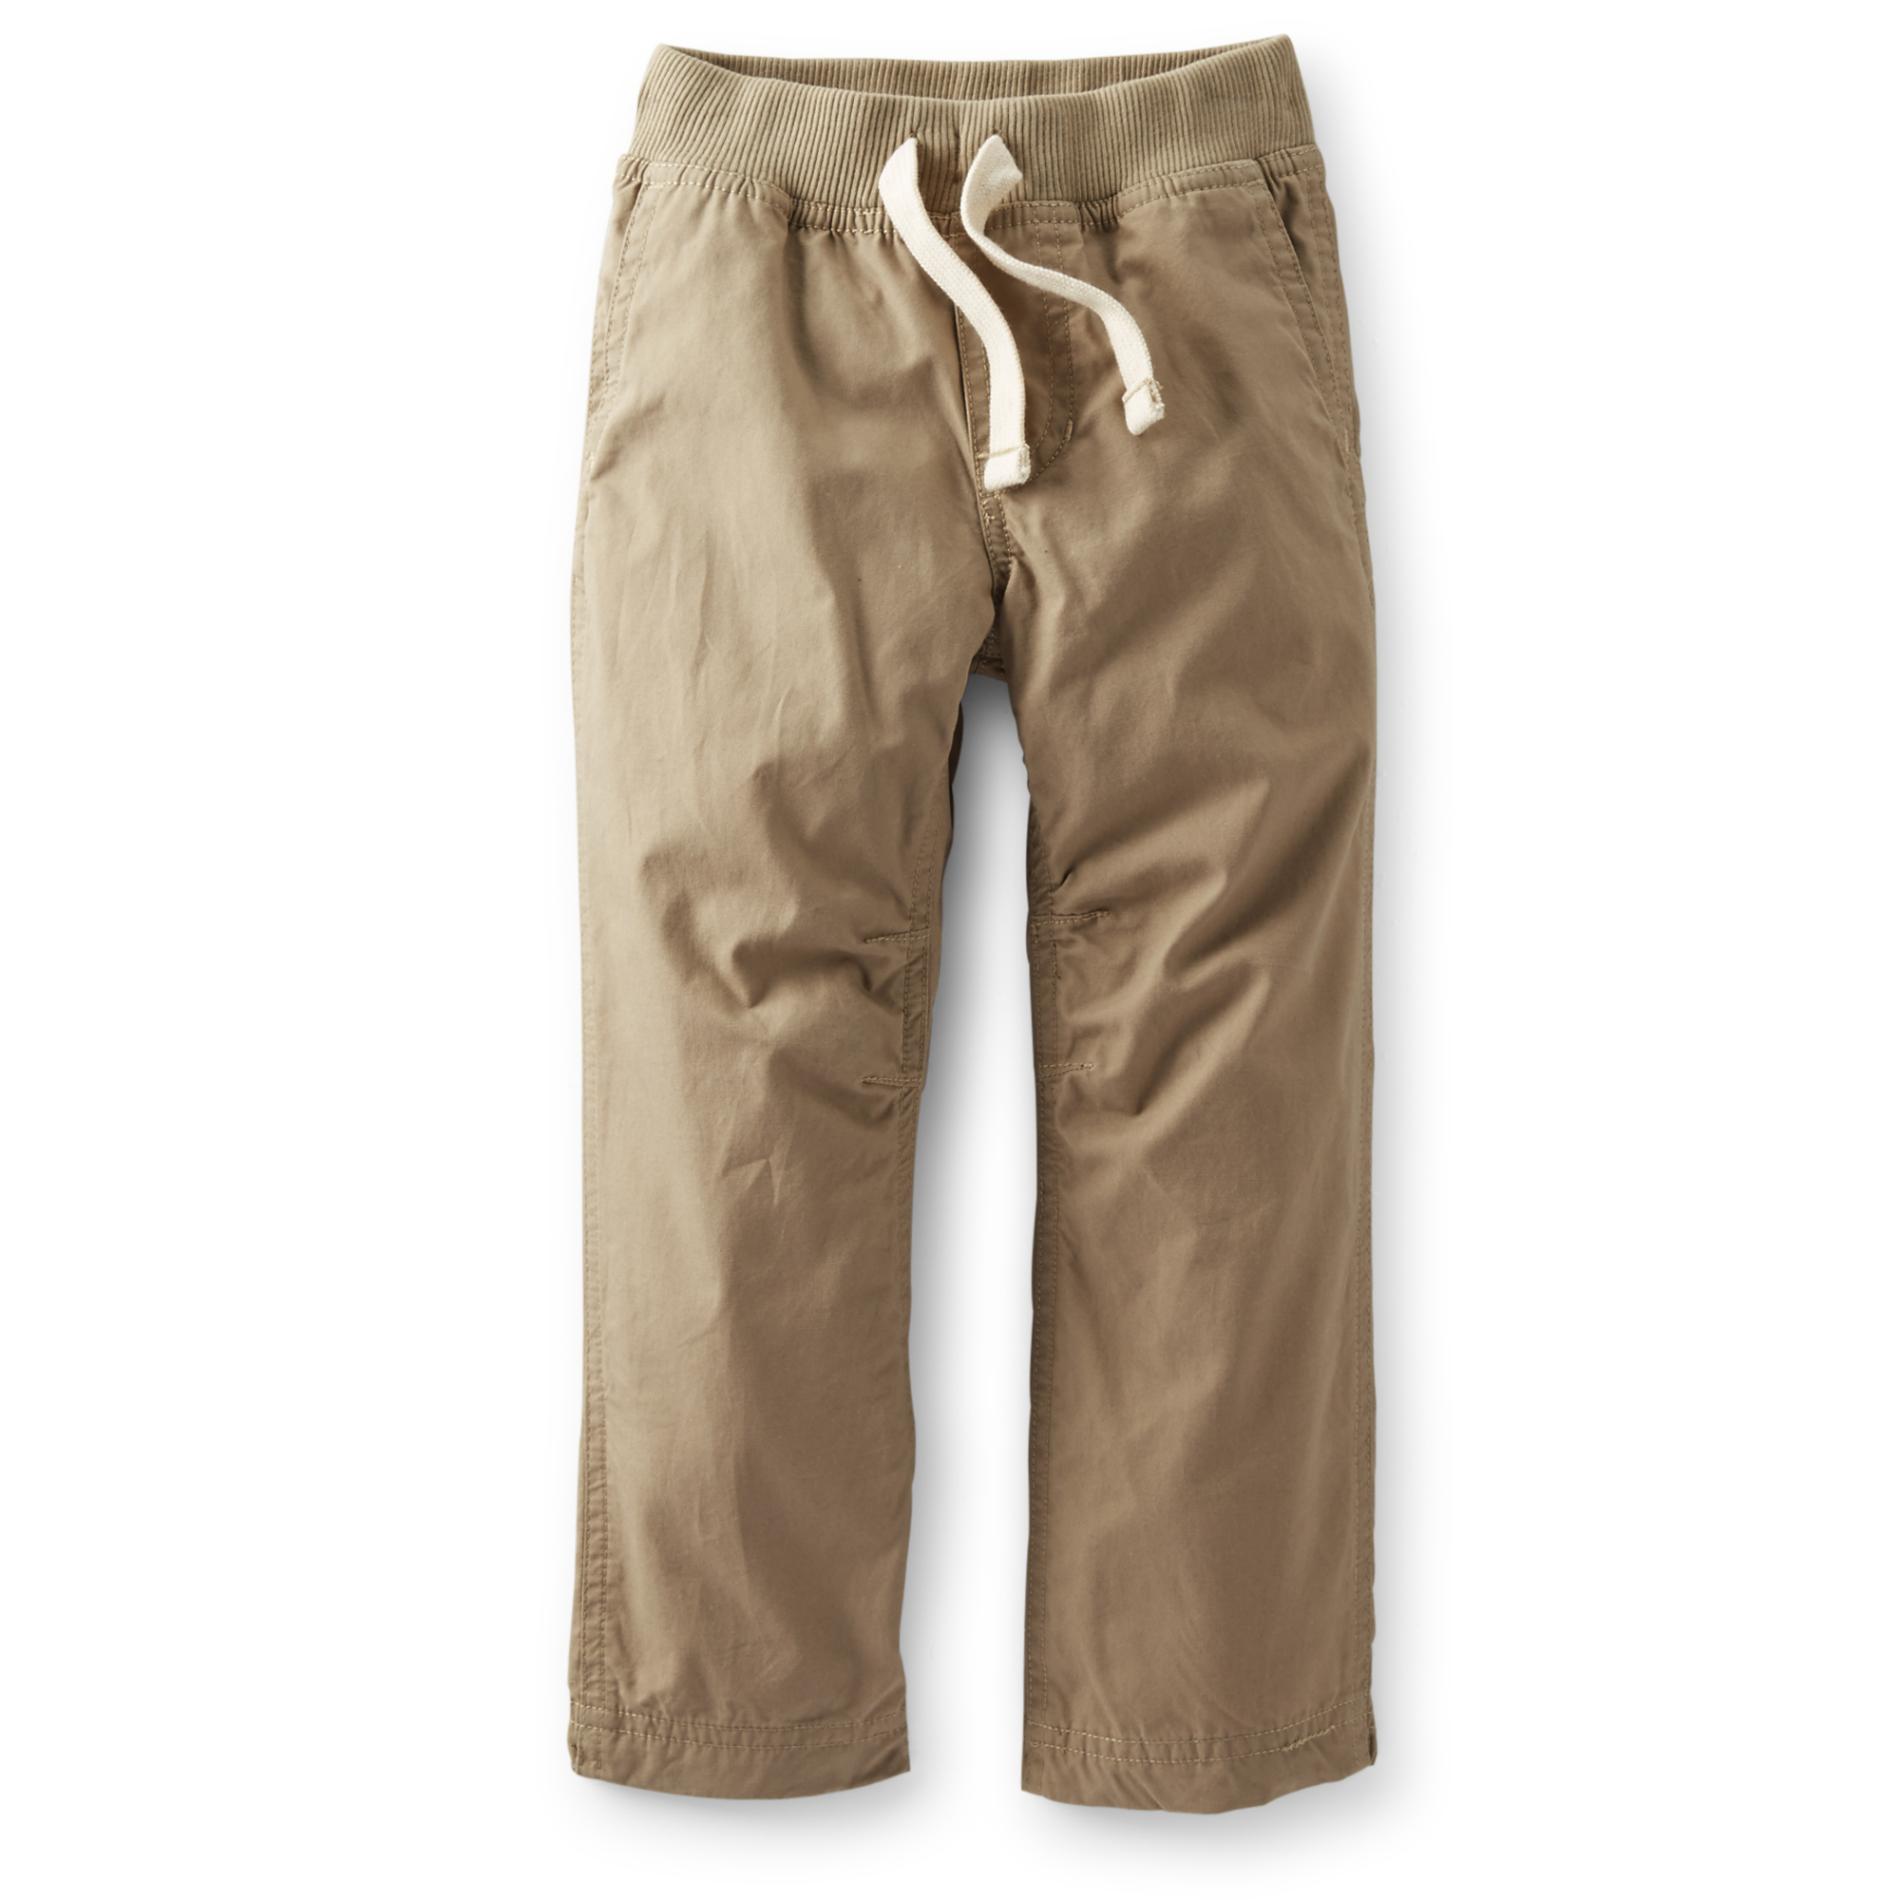 Carter's Boy's Casual Khaki Pants